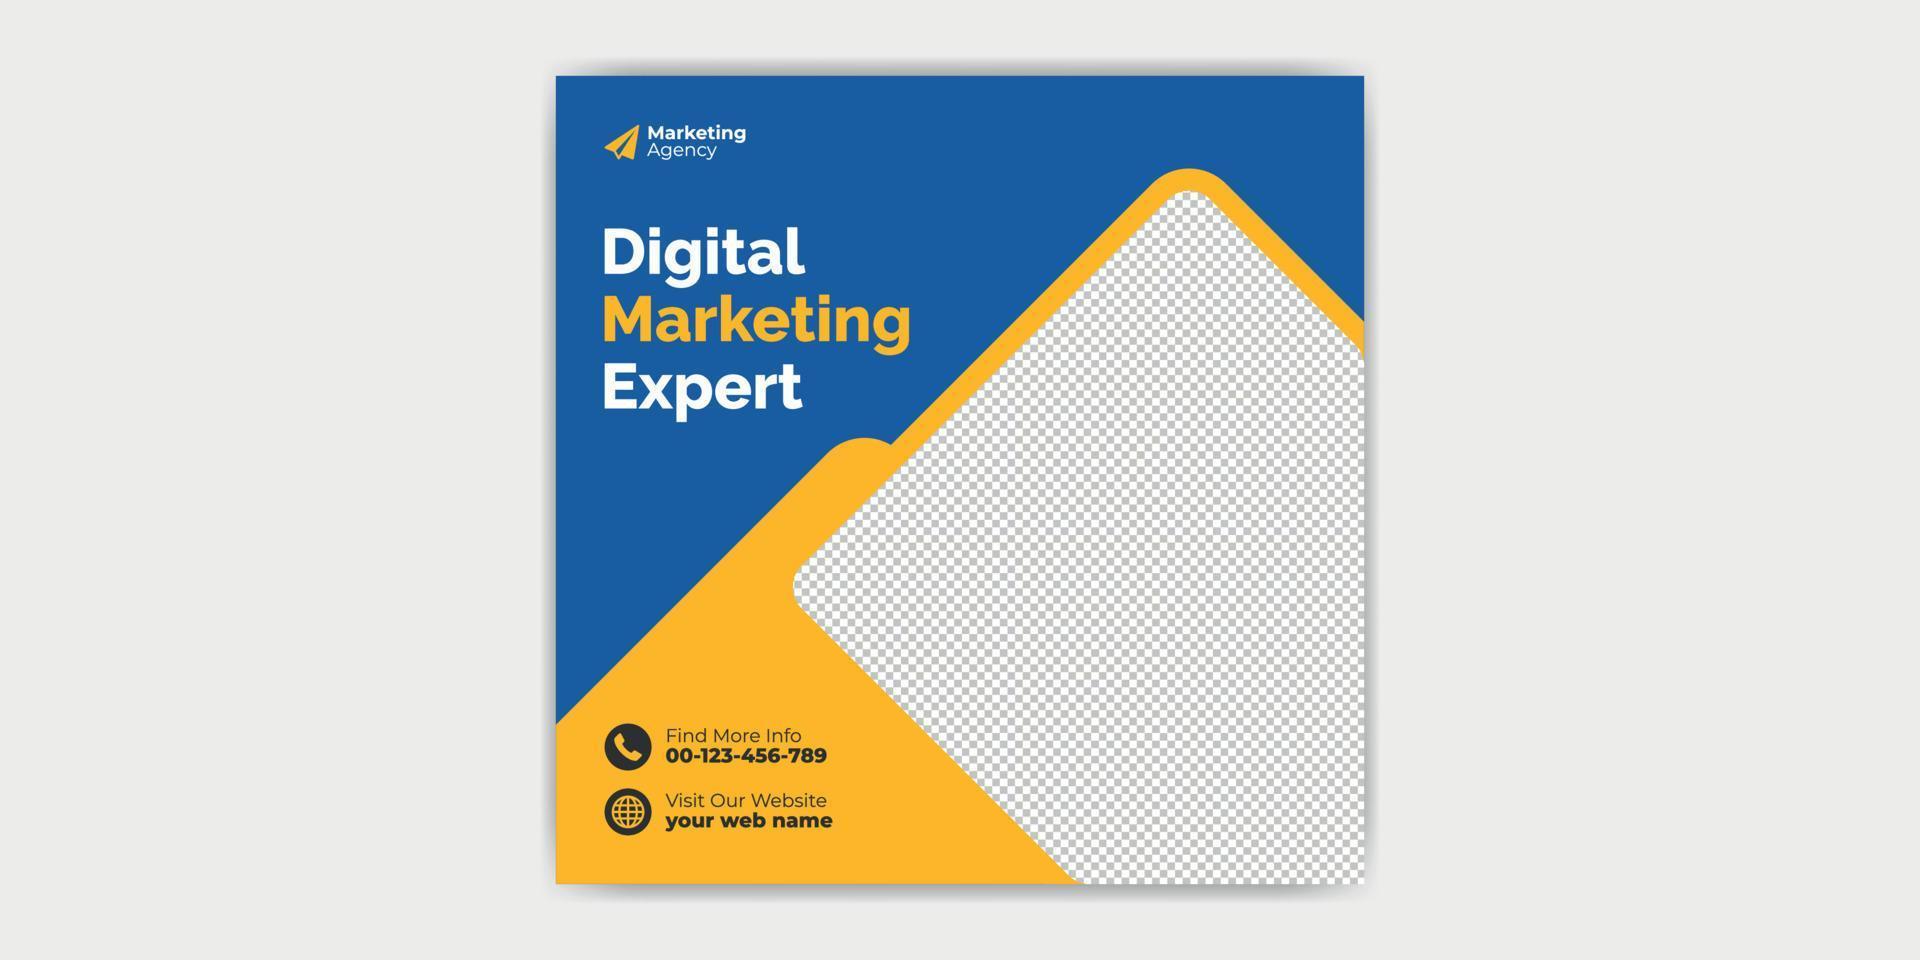 Digital Marketing Agency Corporate Business Social Media Post vector